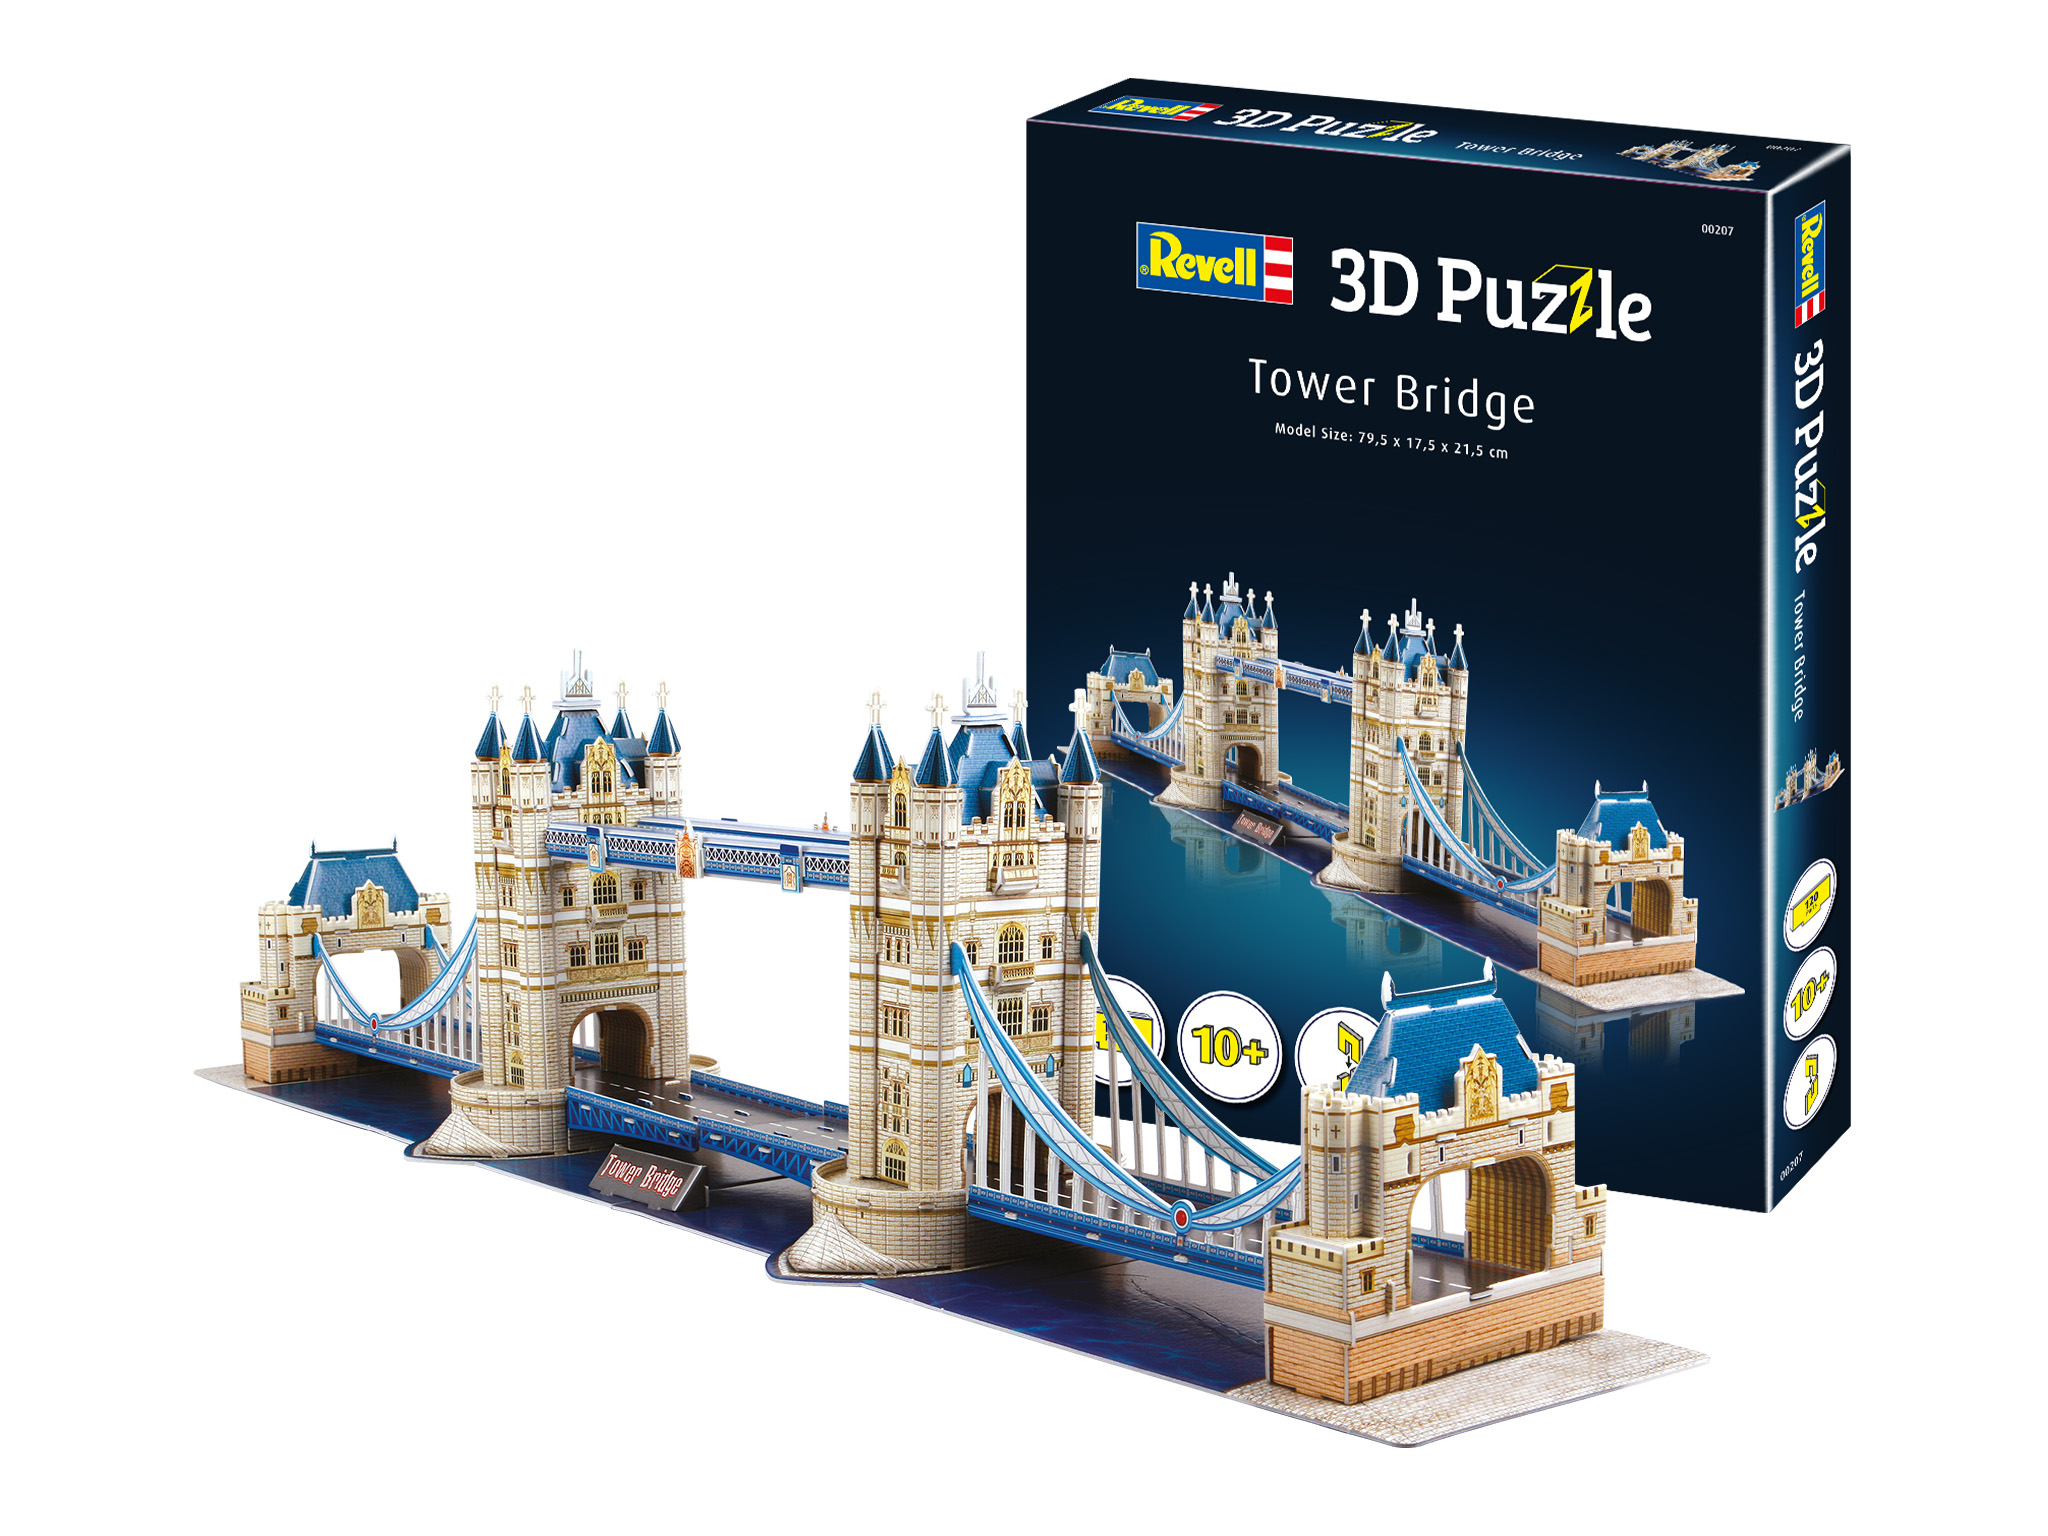 Revell 00207 Tower Bridge 3D Puzzle